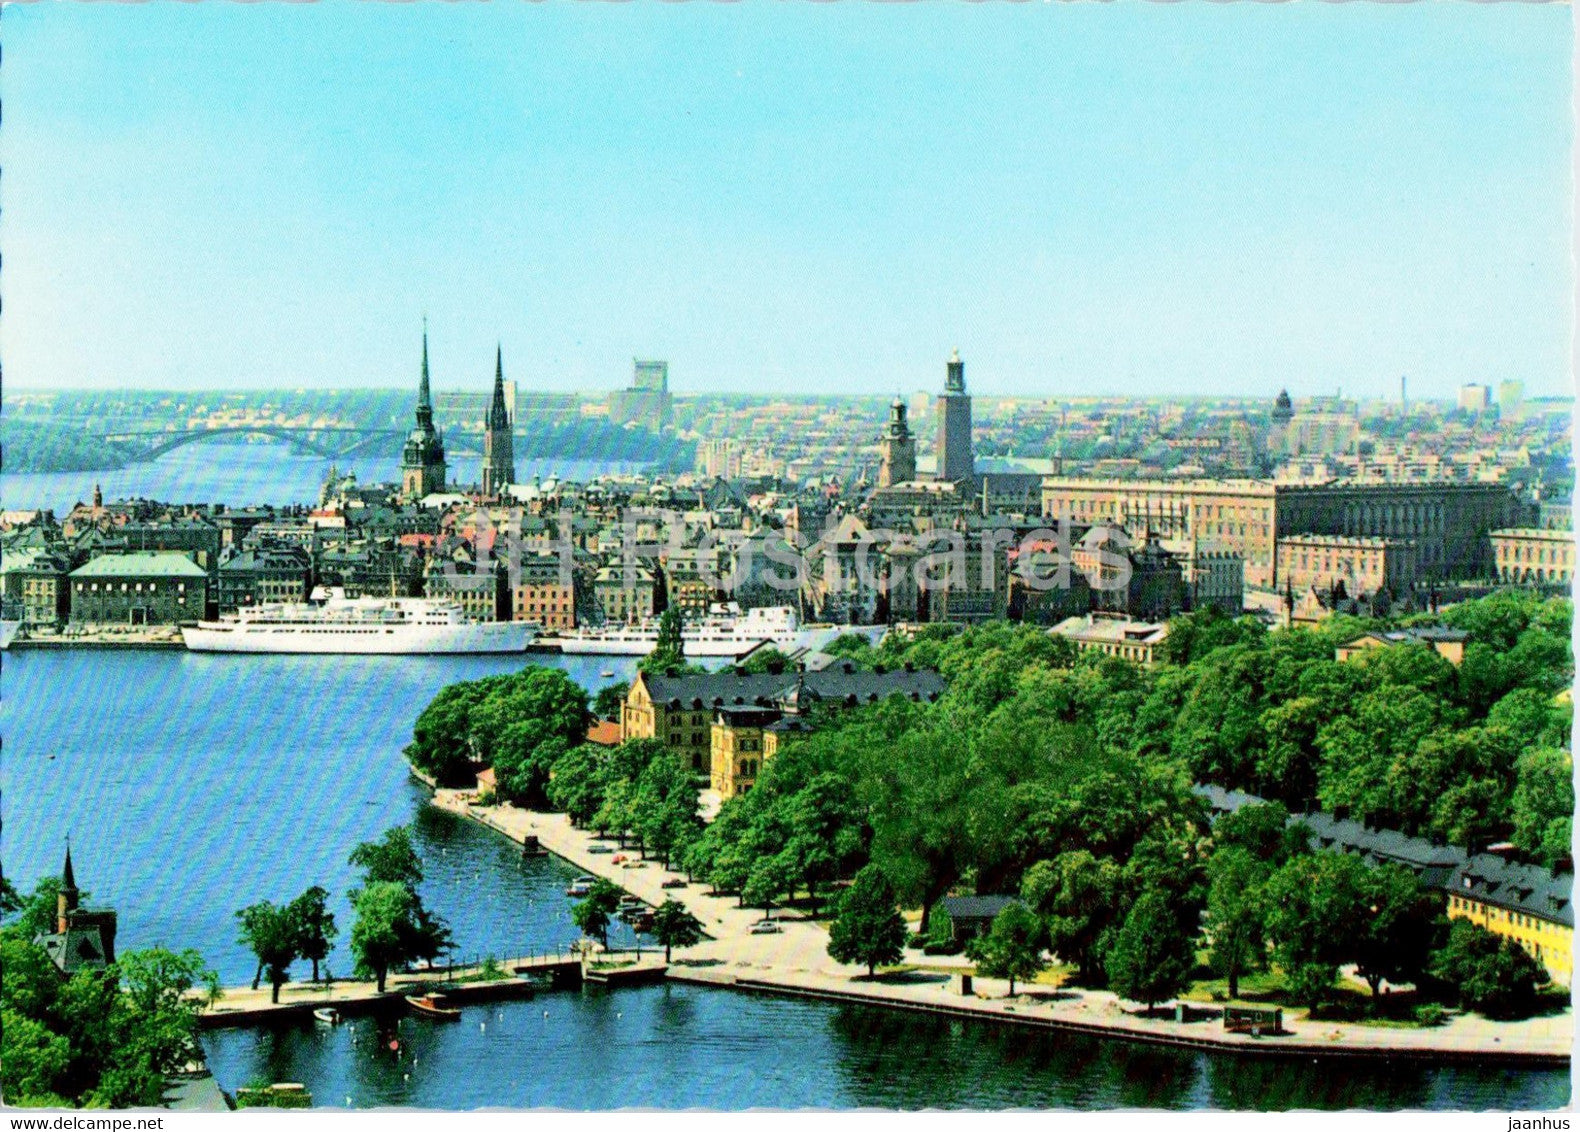 Stockholm - Utskit mot Gamla stan - Look out towards the Old Town - Sweden - unused - JH Postcards